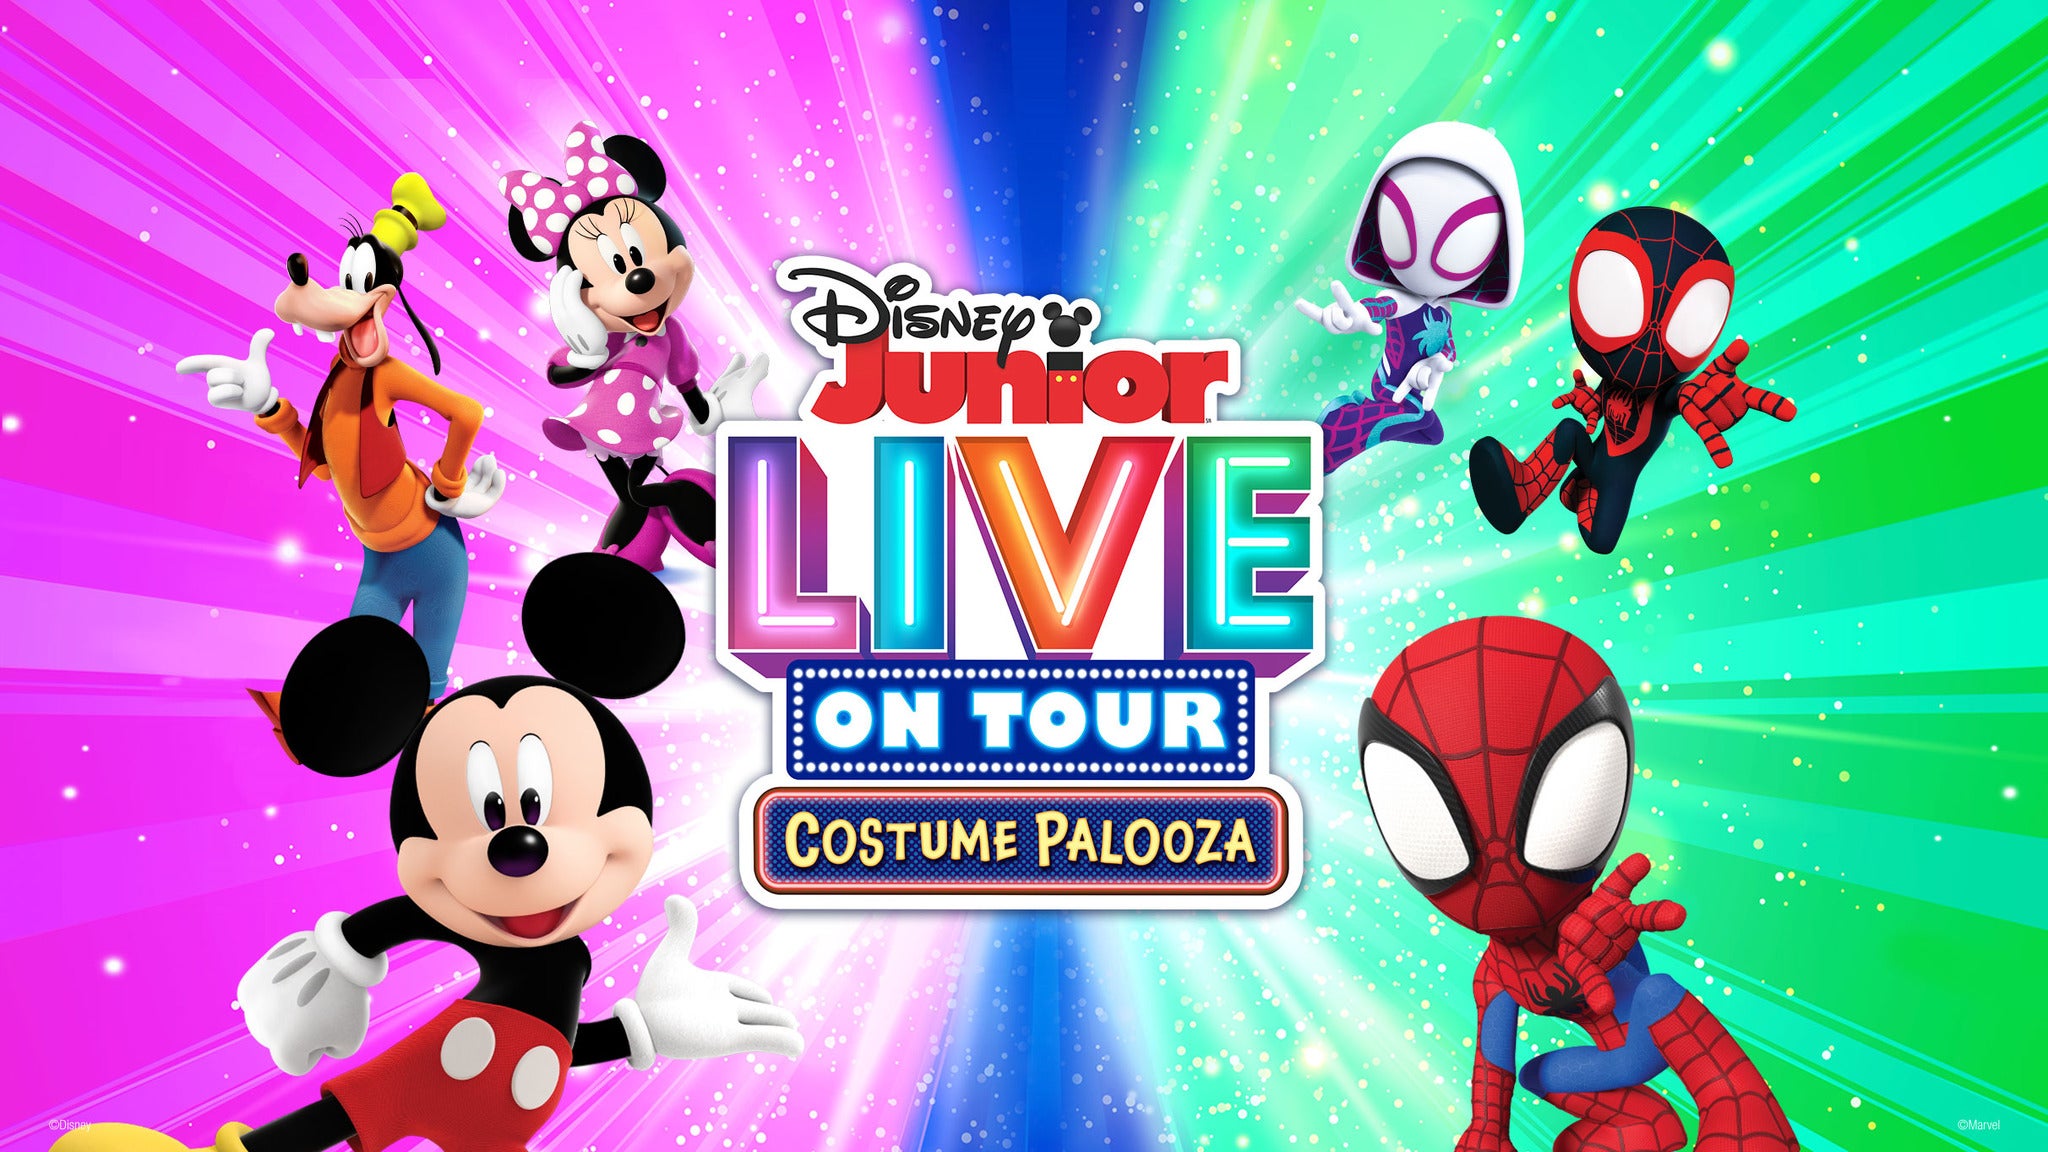 Disney Junior Live On Tour: Costume Palooza at The Magnolia - El Cajon, CA 92020